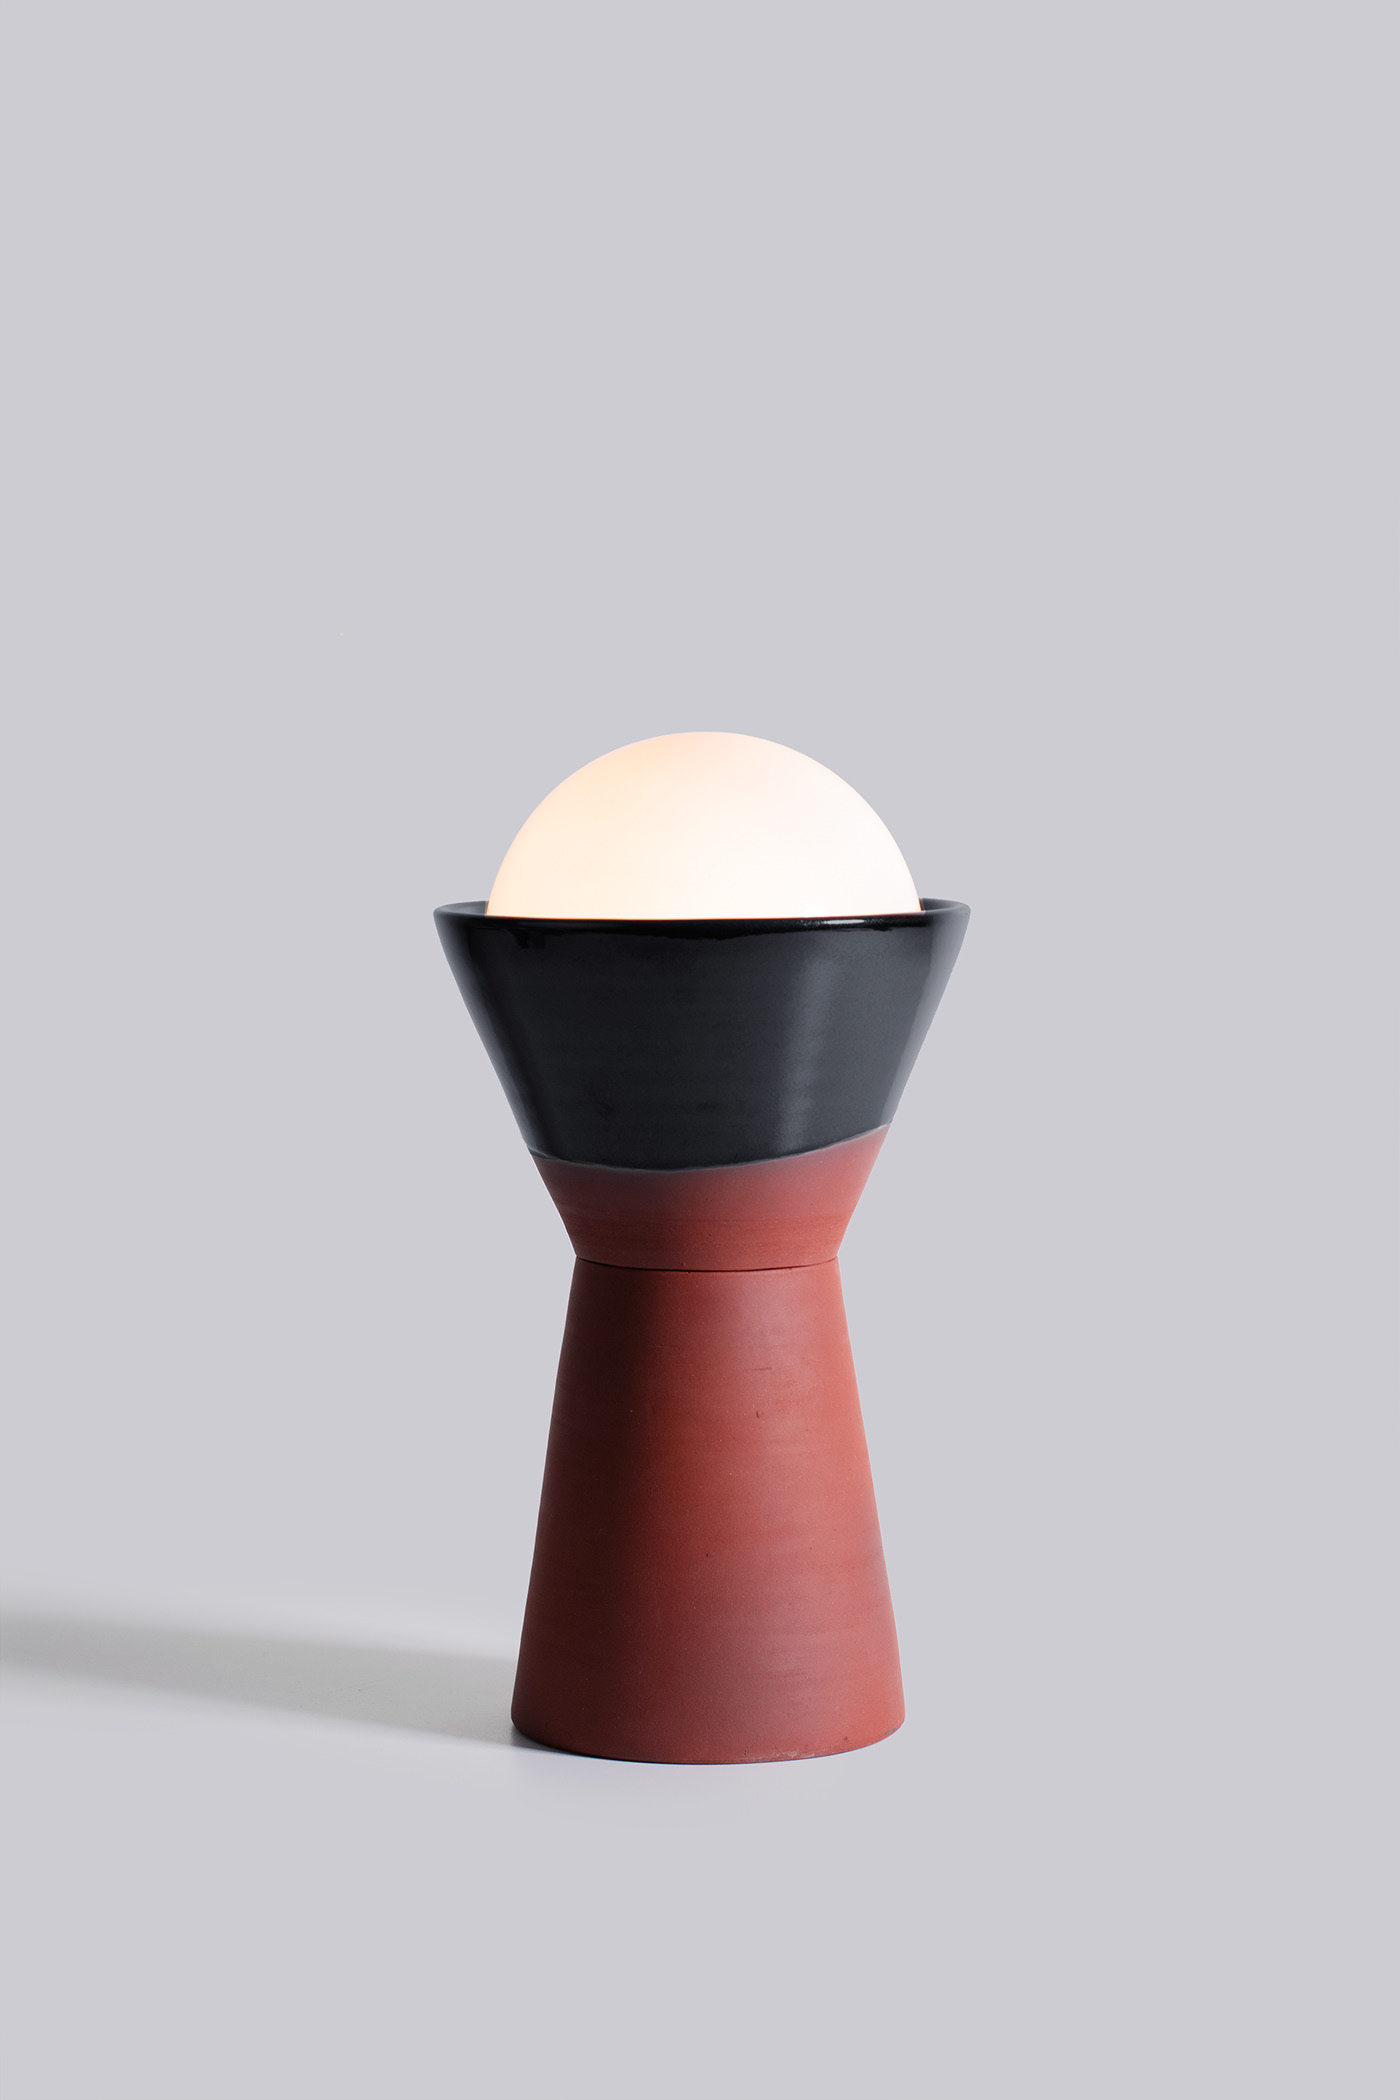 ceramic craft design handmade home interior design  Lamp light Photography  Pottery